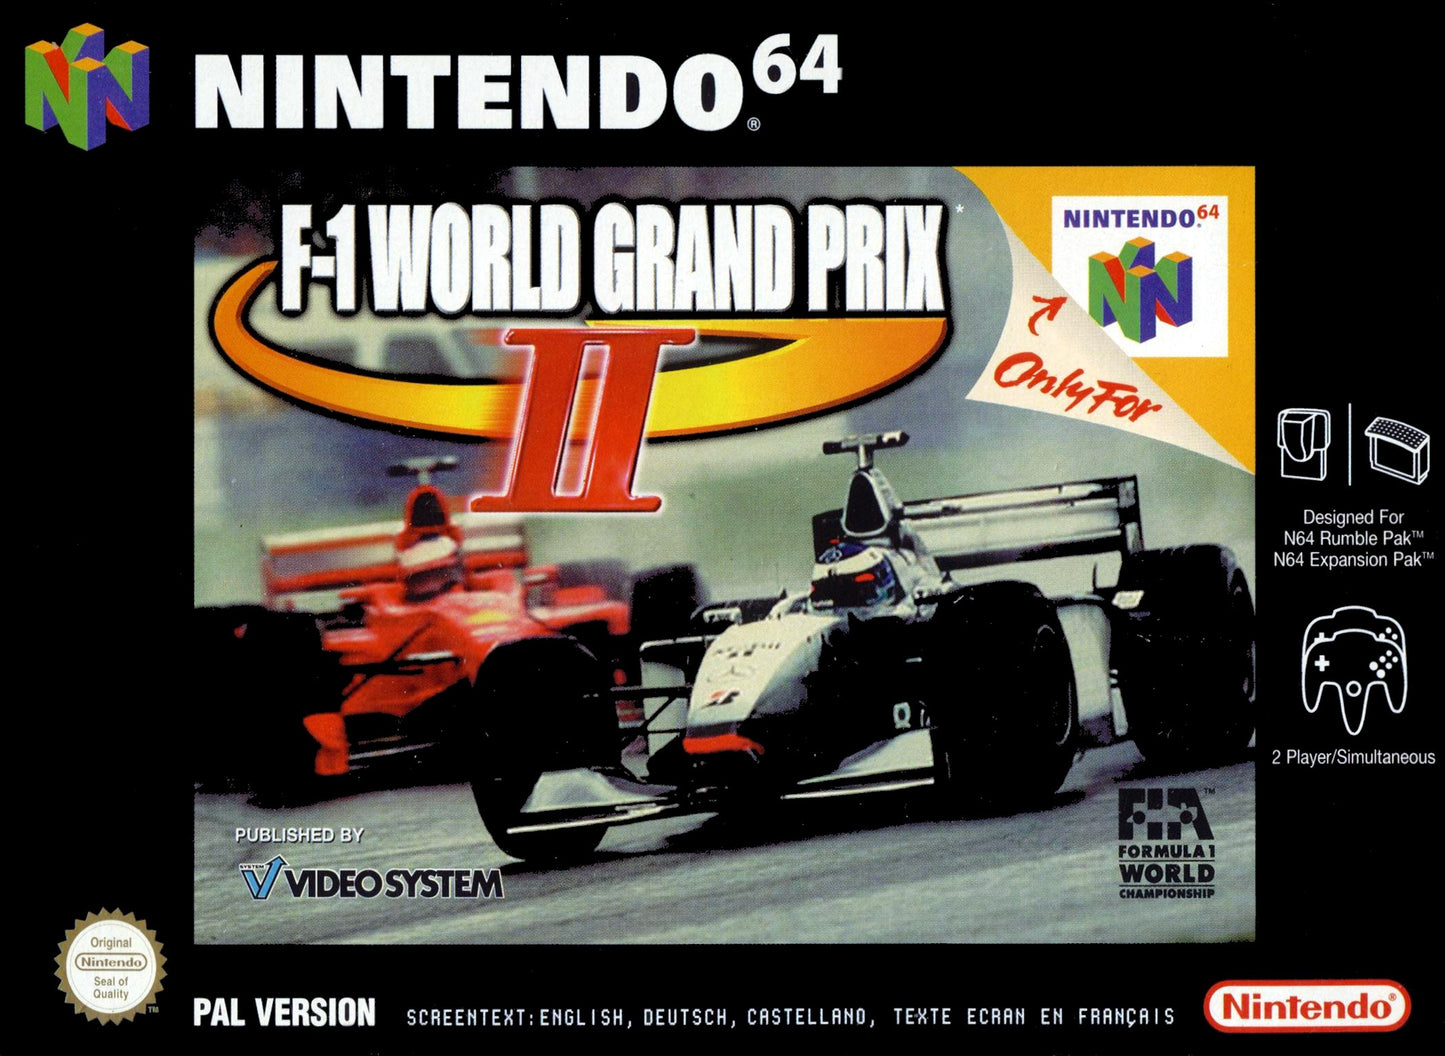 F-1 World Grand Prix 2